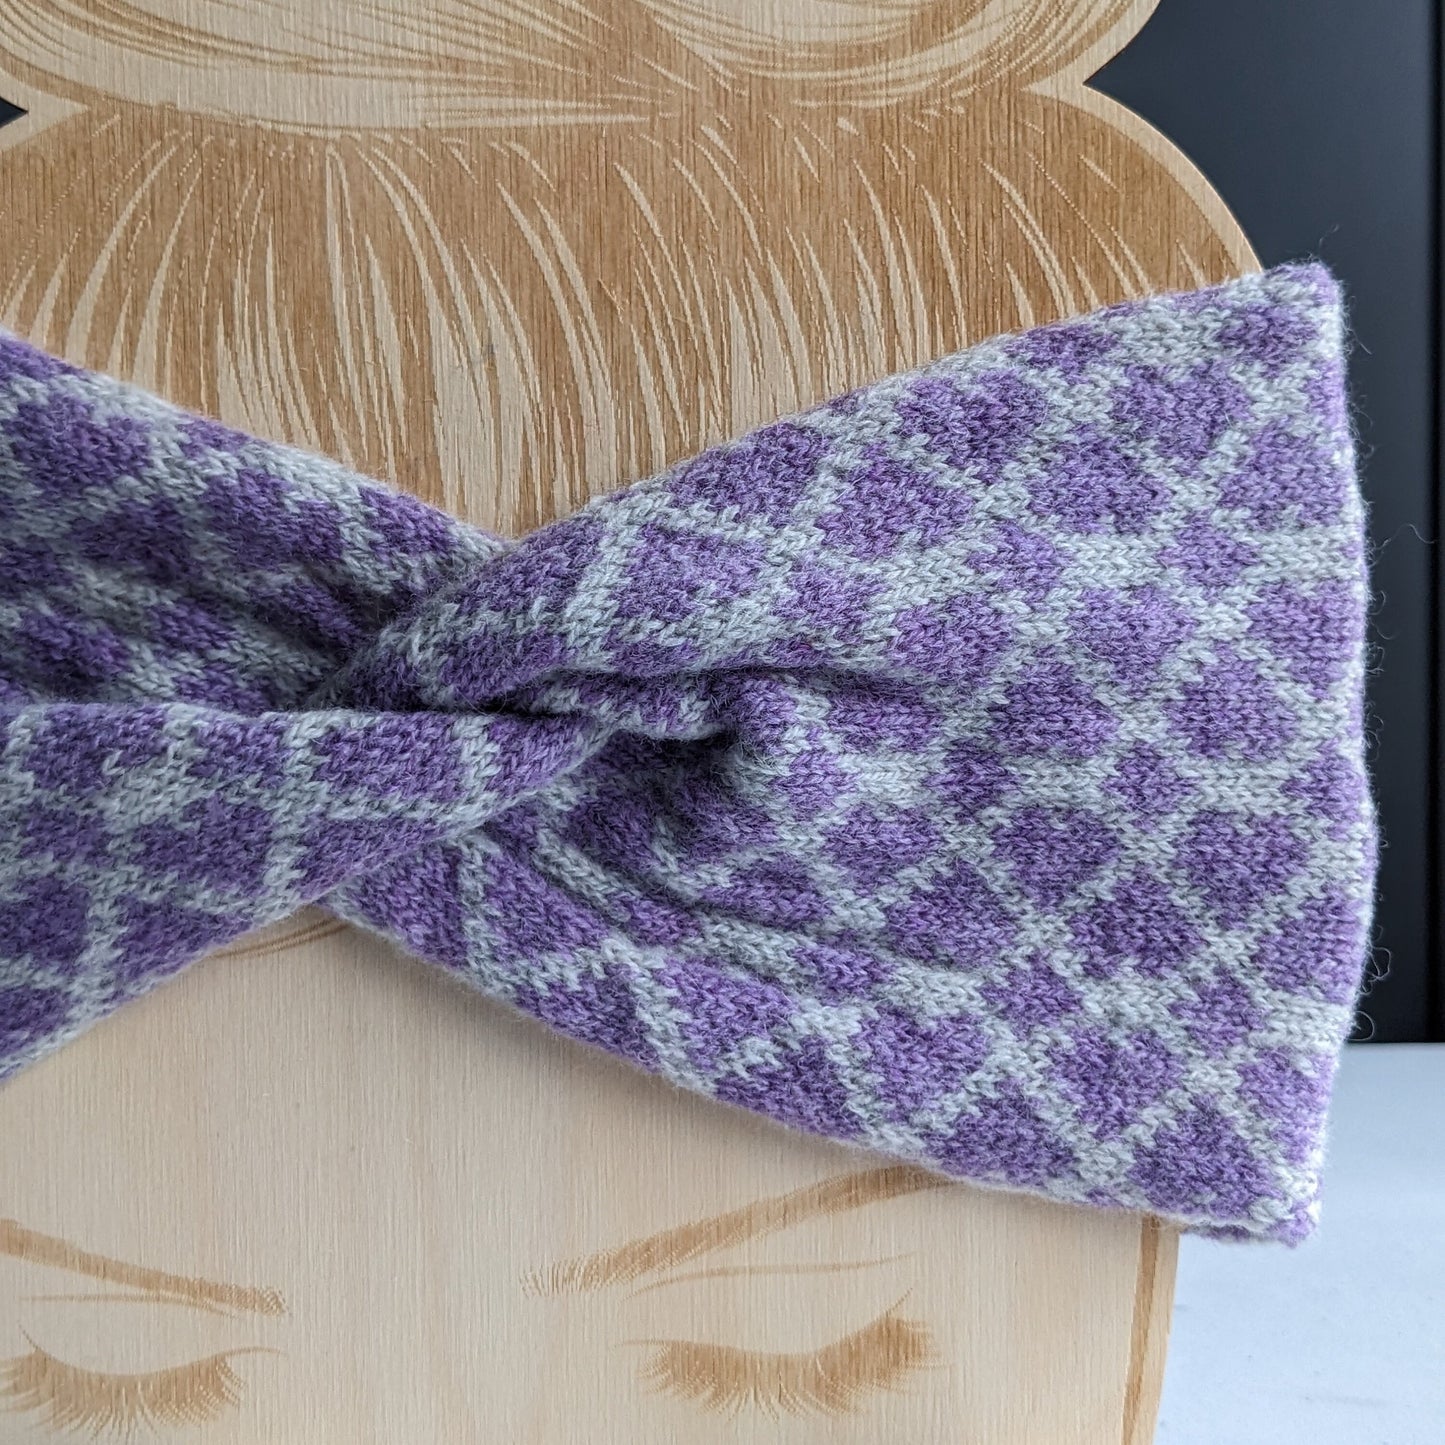 Merino wool ear warmer knitted headband pale grey with purple hearts